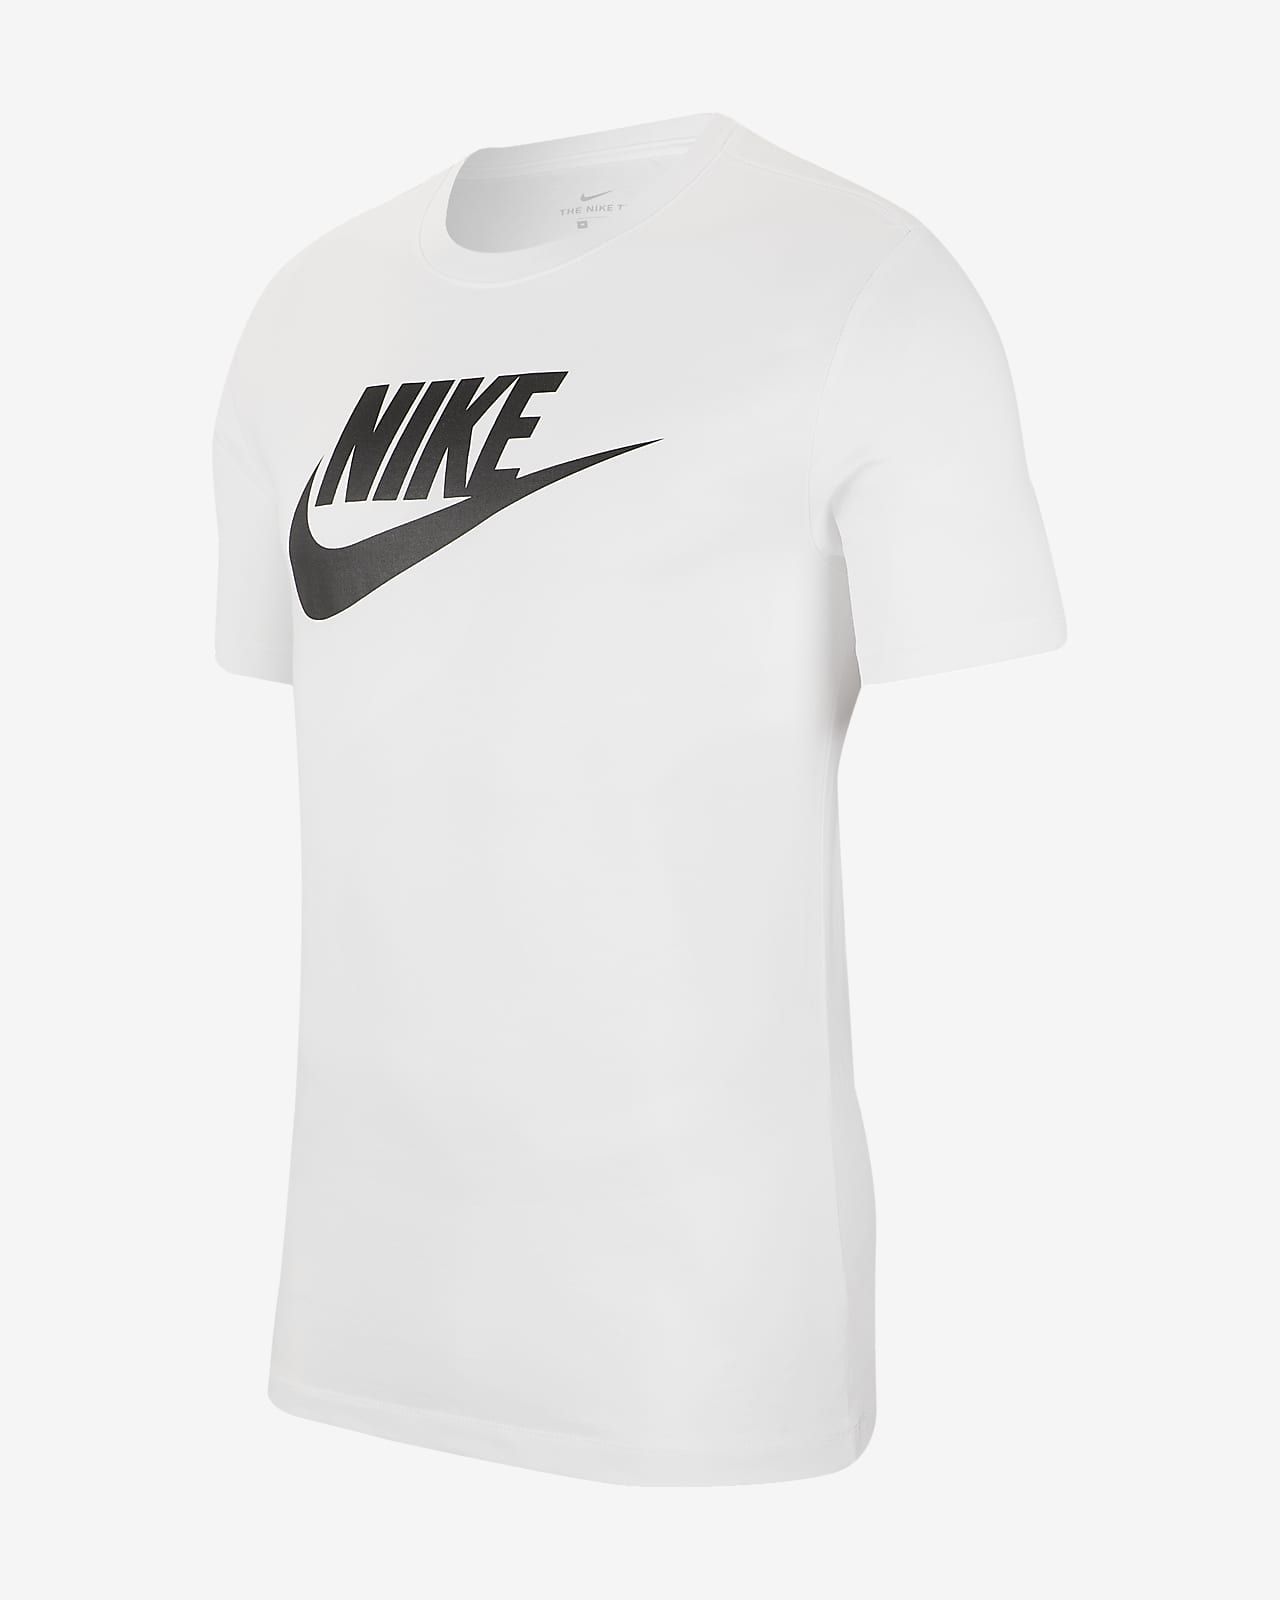 Nike Sportswear Men's T-Shirt. Nike.com | Nike (US)